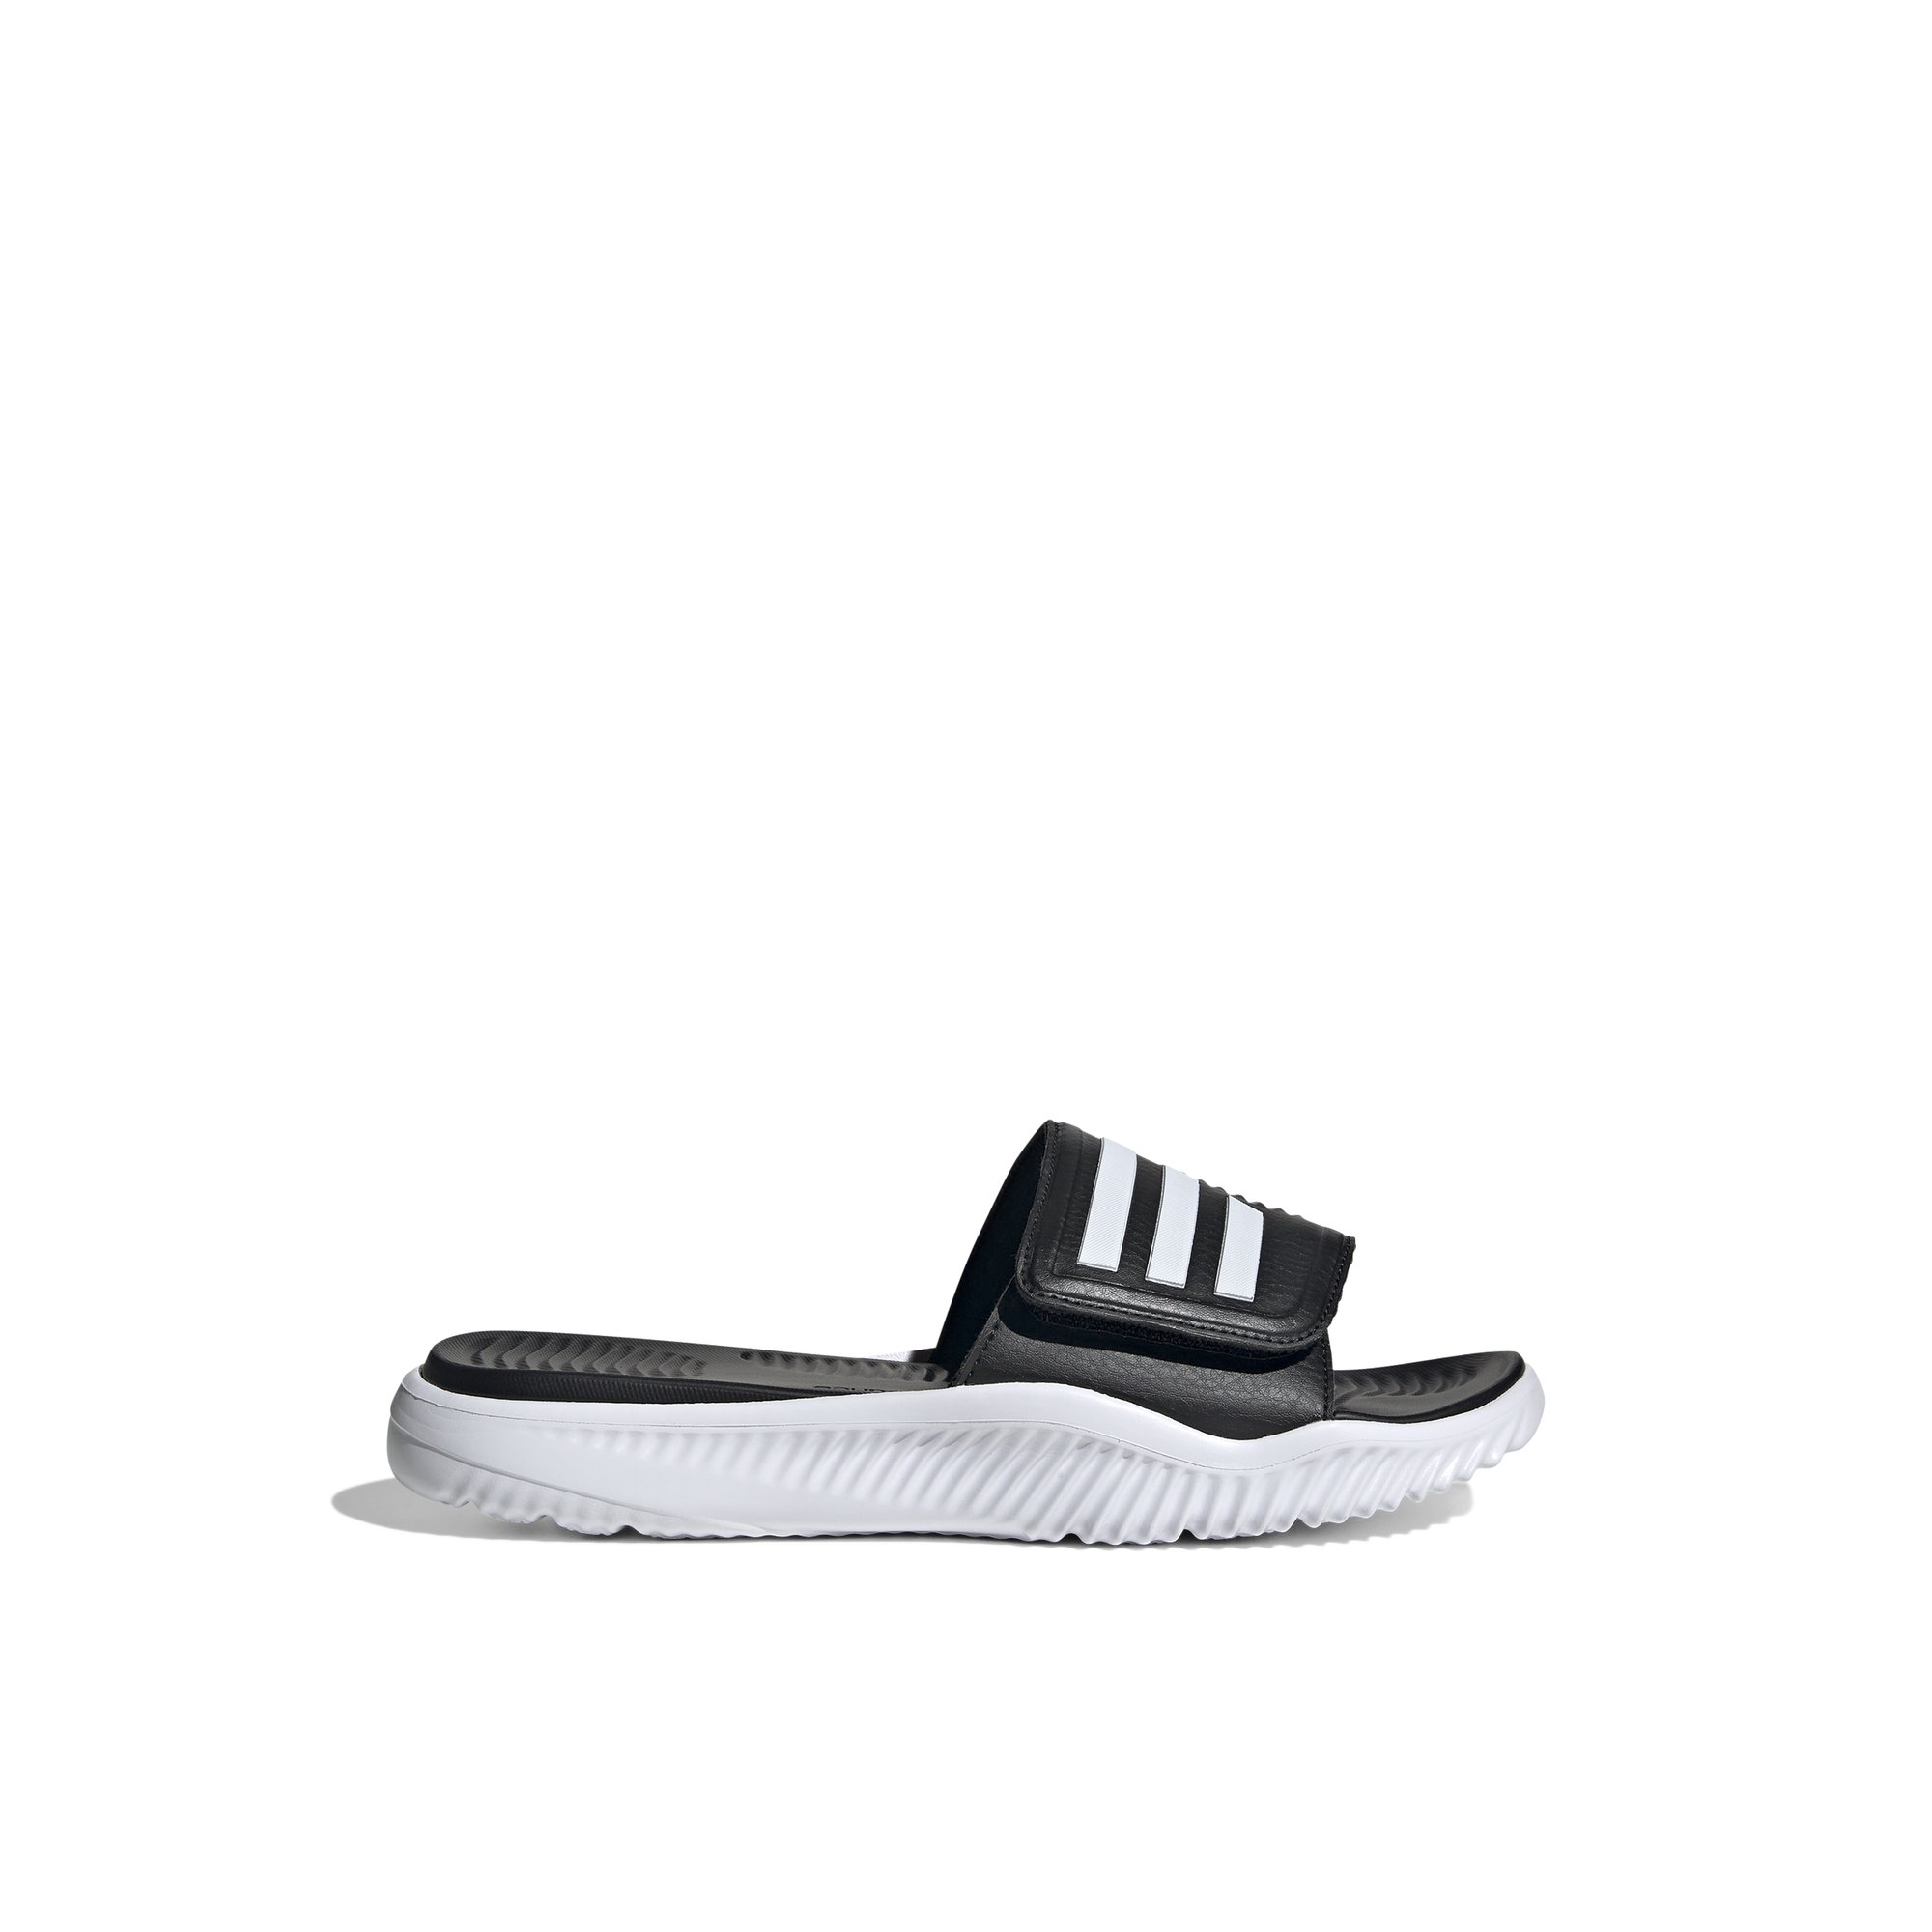 Adidas Alpha Boun-m - Men's Footwear Sandals Black